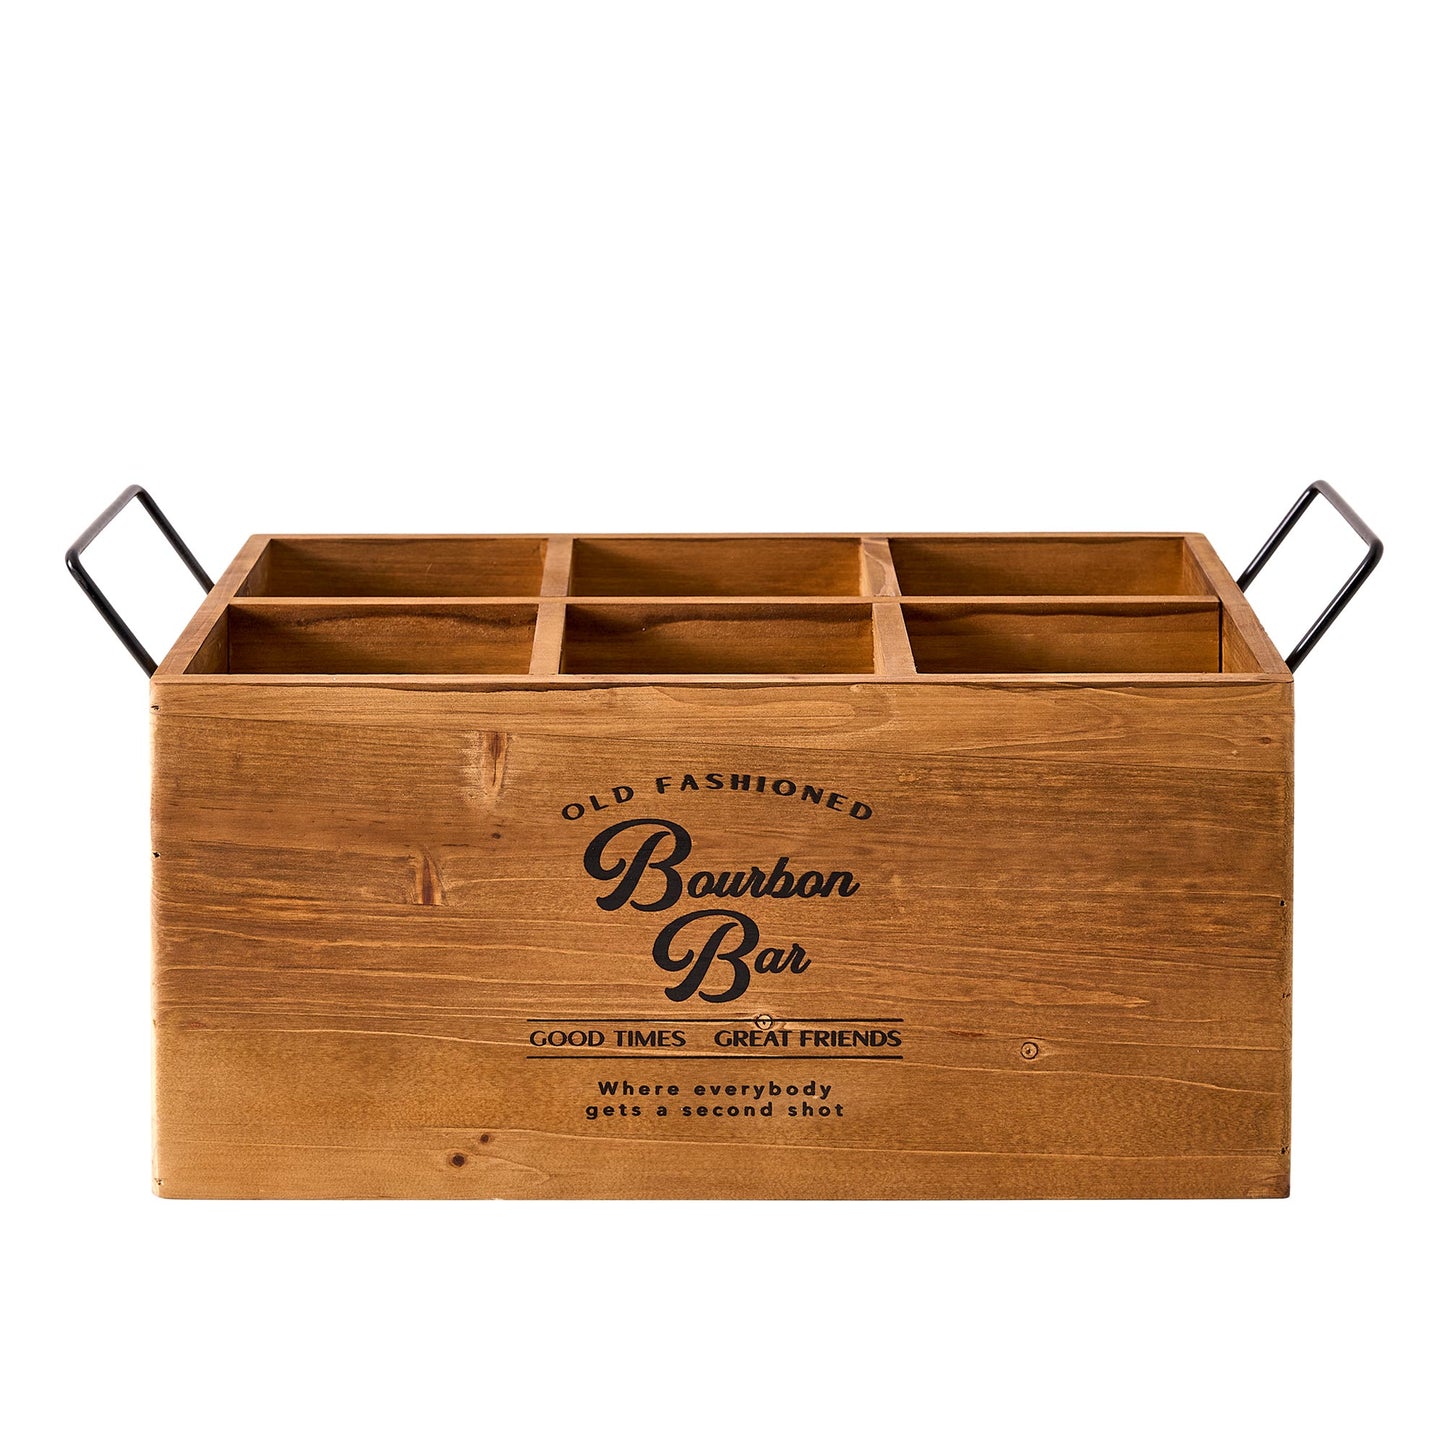 The Bourbon Bar Wood Crate Bottle Holder with Metal Handles - 7" H x 14" L x 8" D